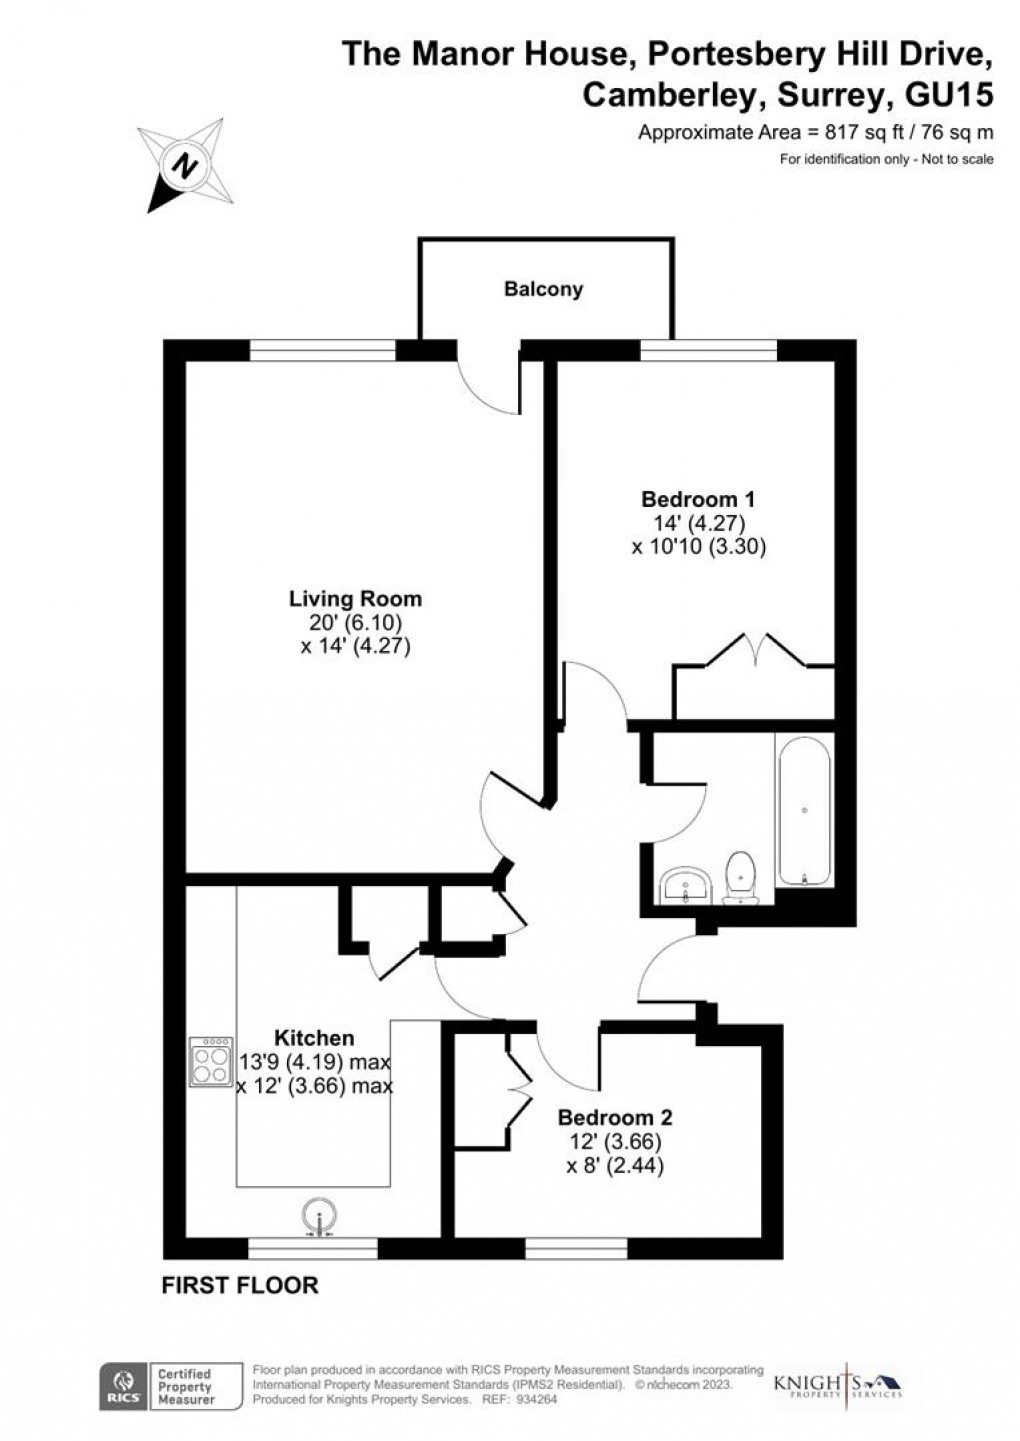 Floorplan for The Manor House, Portesbery Hill Drive, Camberley